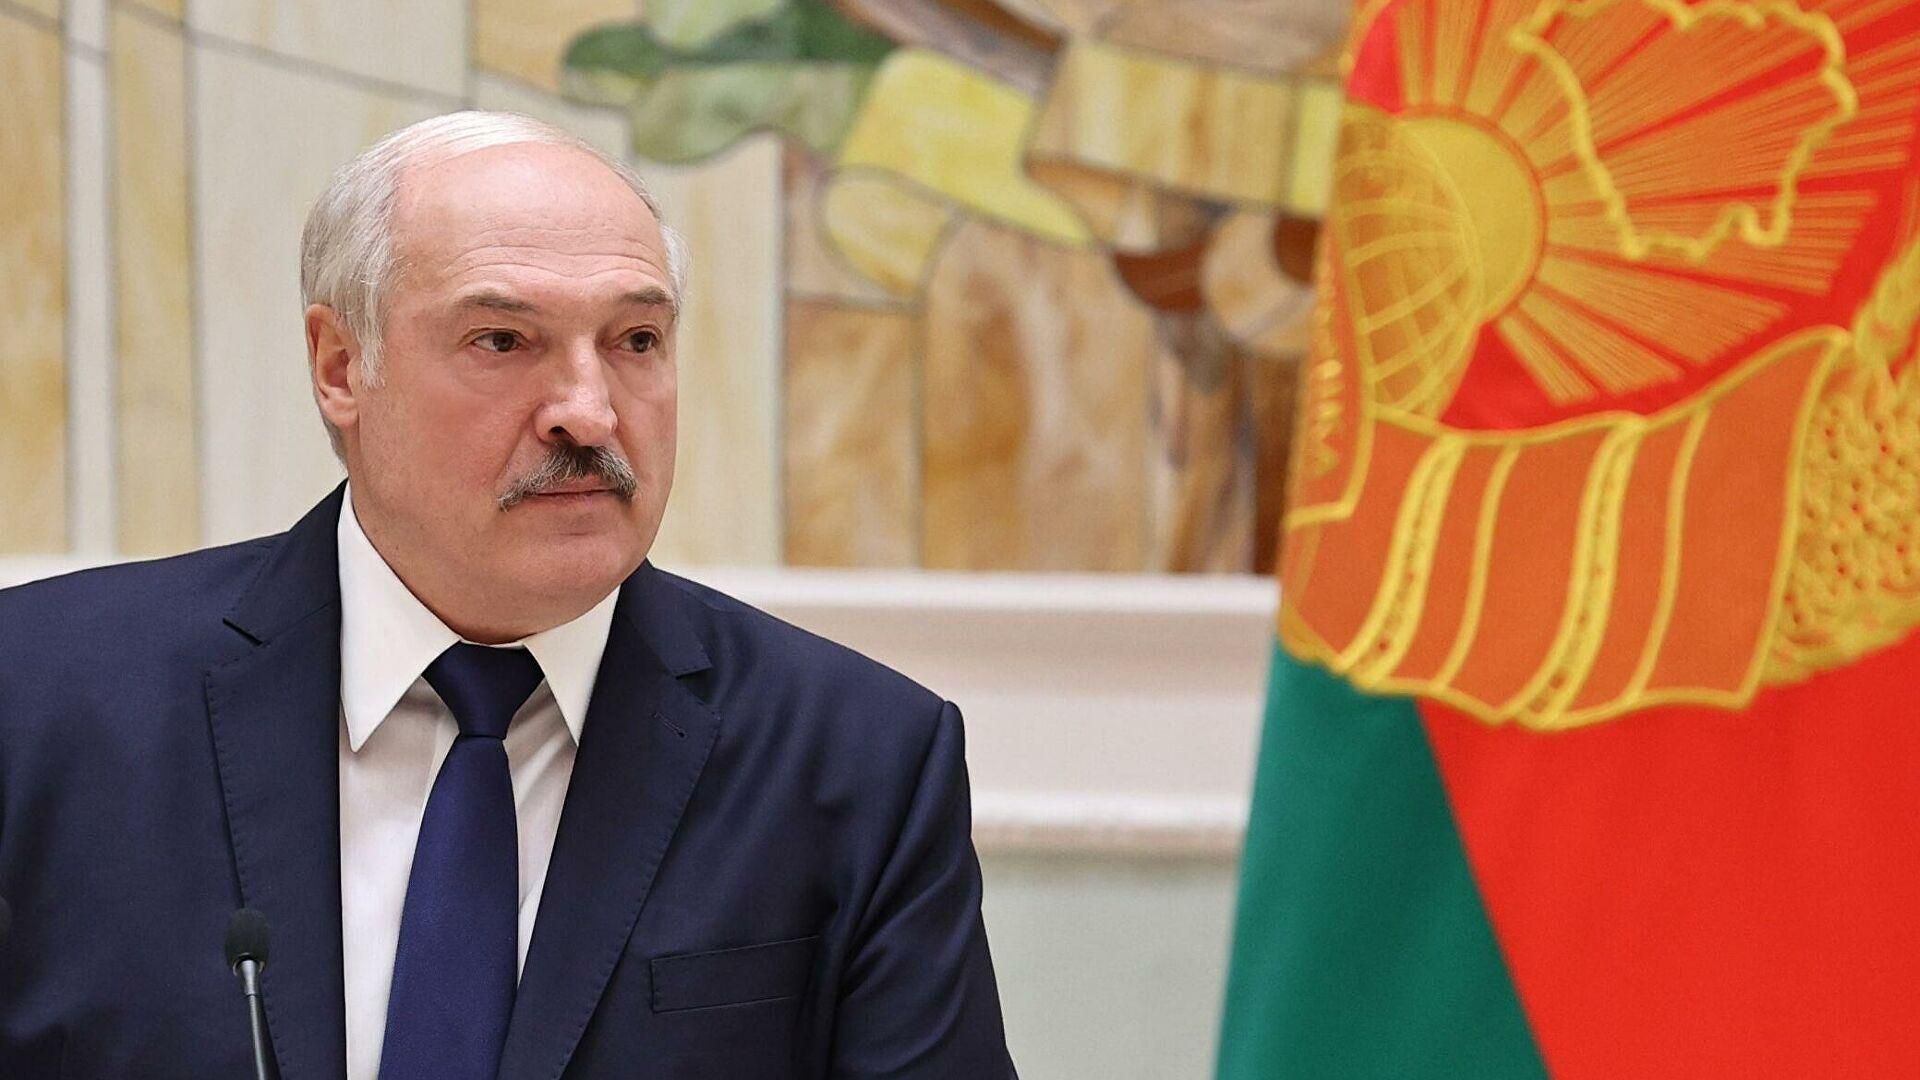 За вами следят американцы Лукашенко раскритиковал iPhone 12